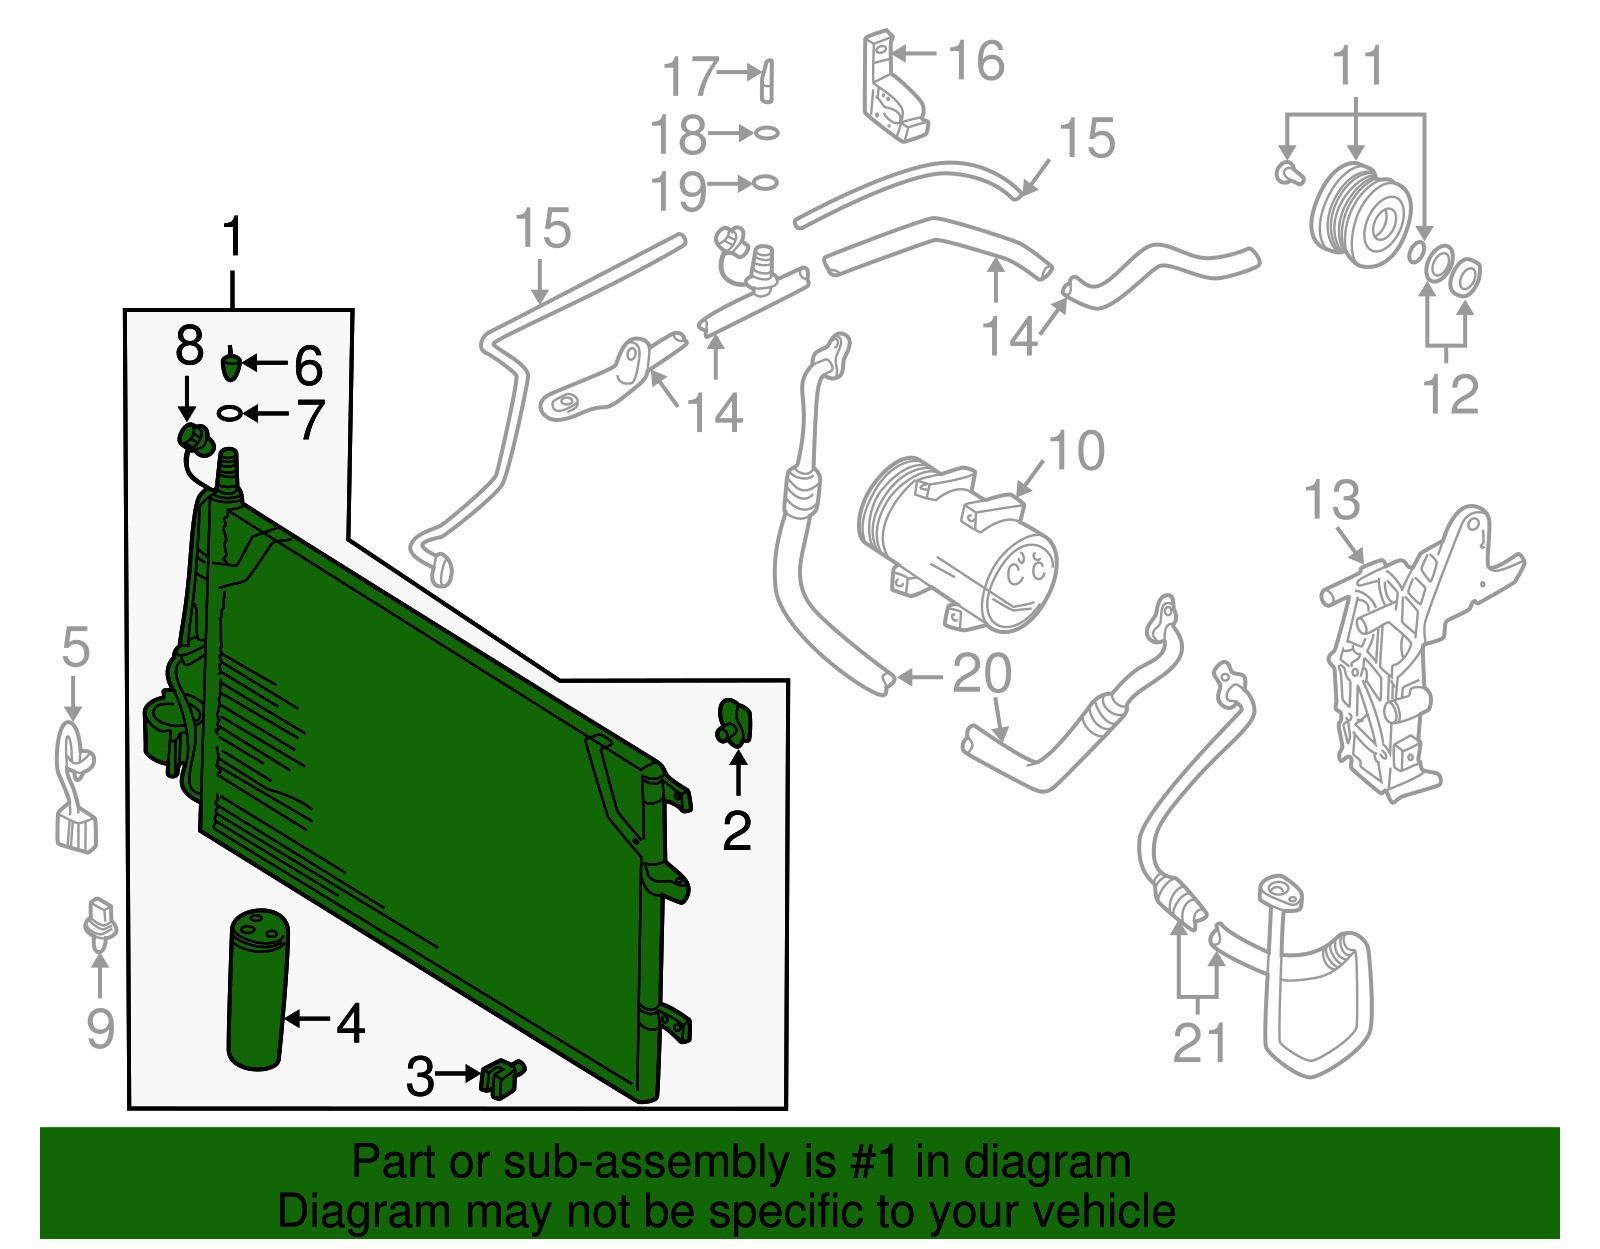 Car Ac Parts Diagram Volvo Oem 08 09 S60 Air Conditioner Condenser Of Car Ac Parts Diagram